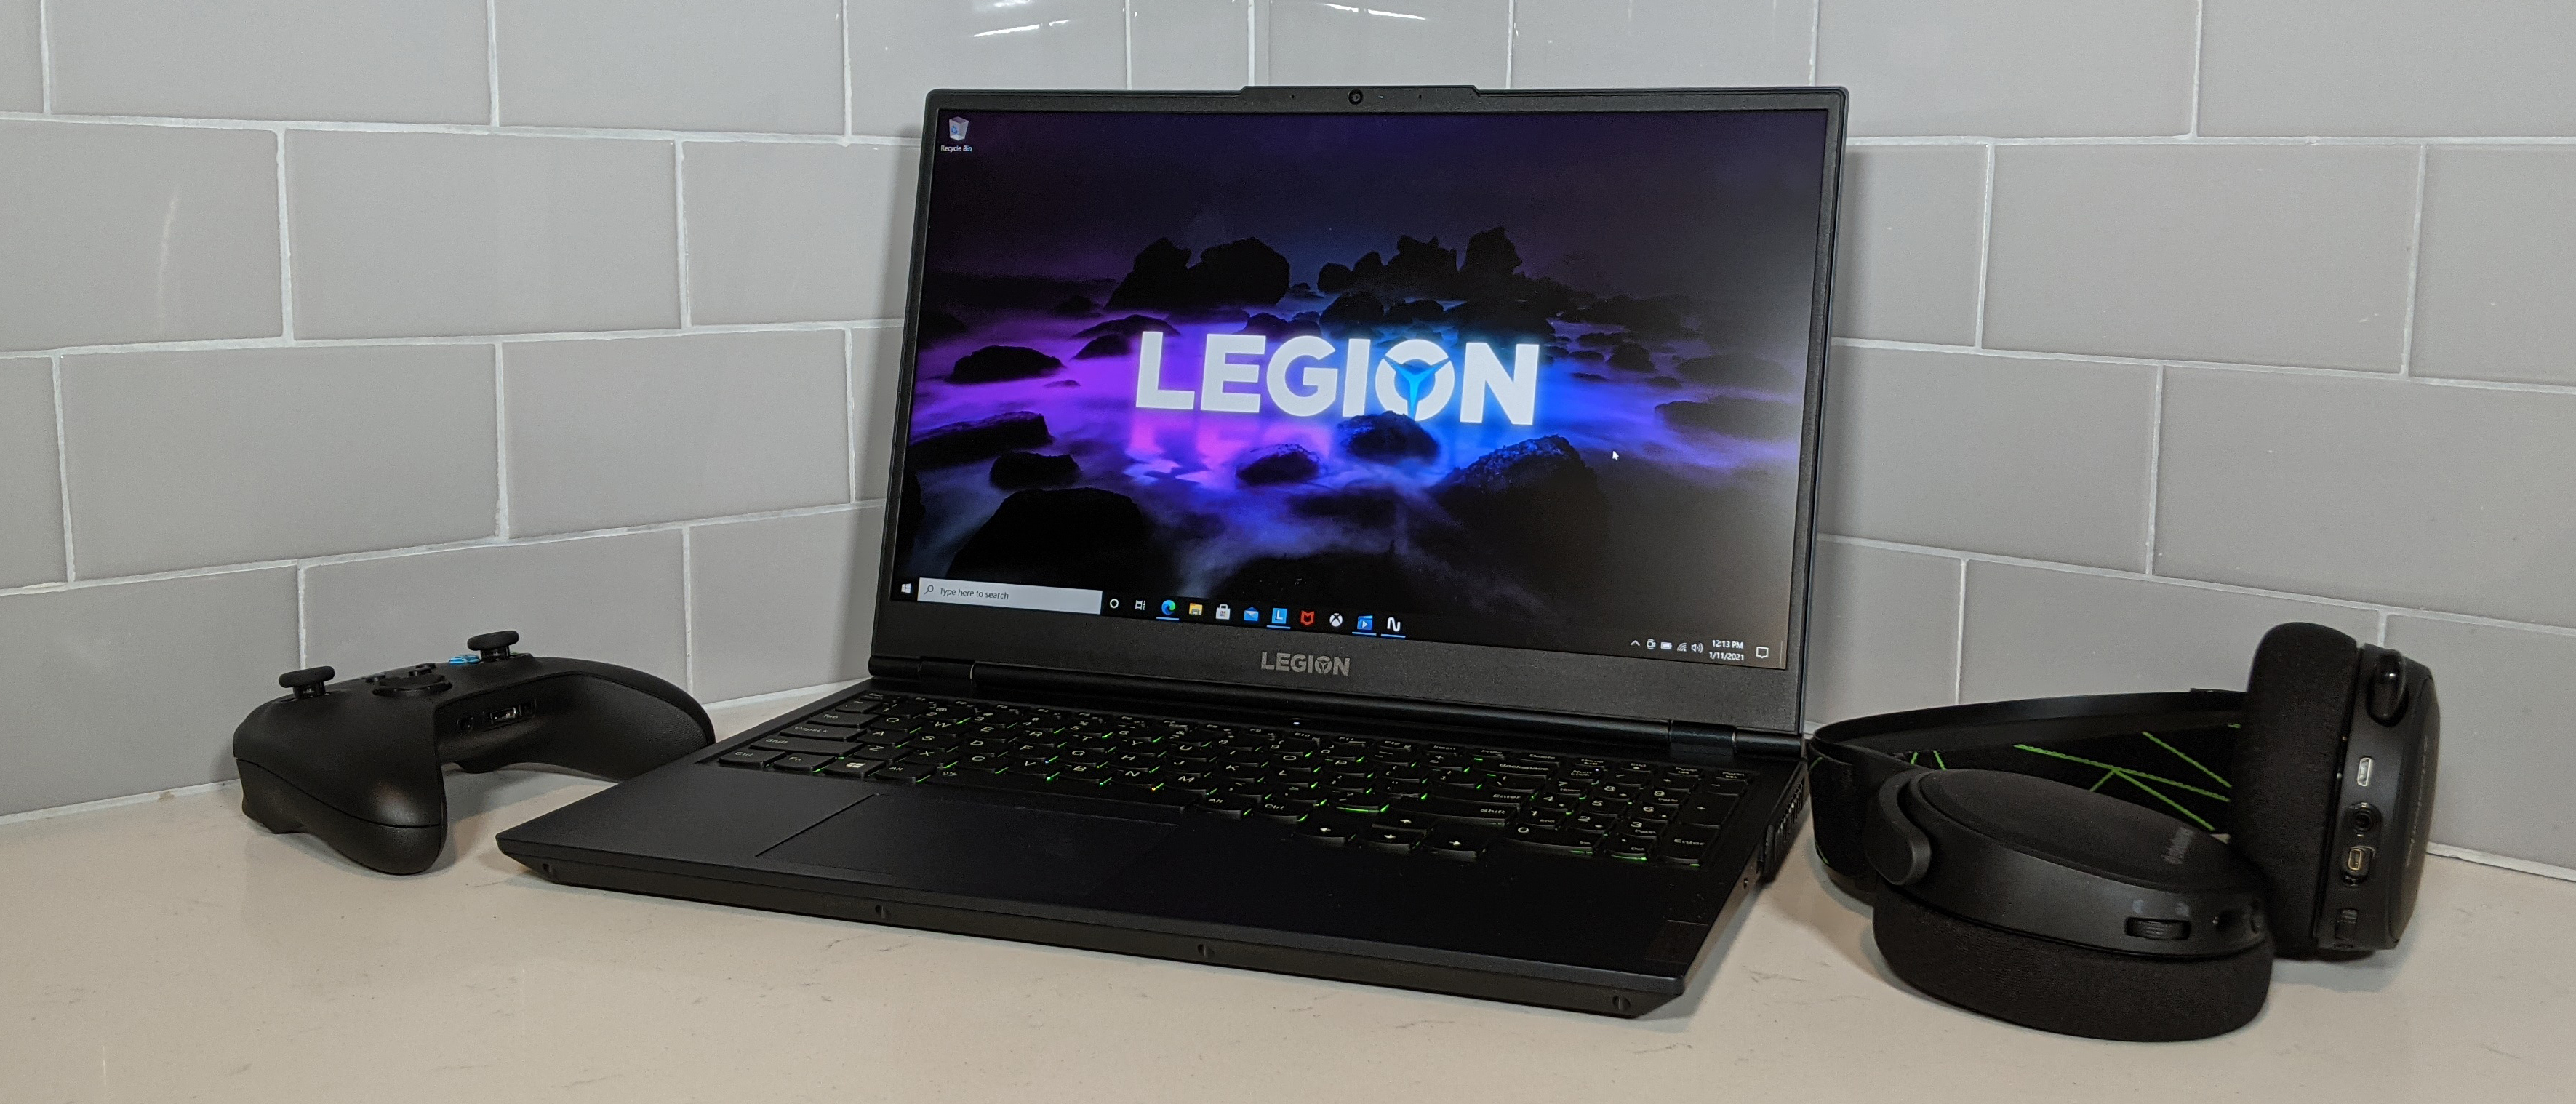 Lenovo Legion 5i (15), 15-inch gaming laptop